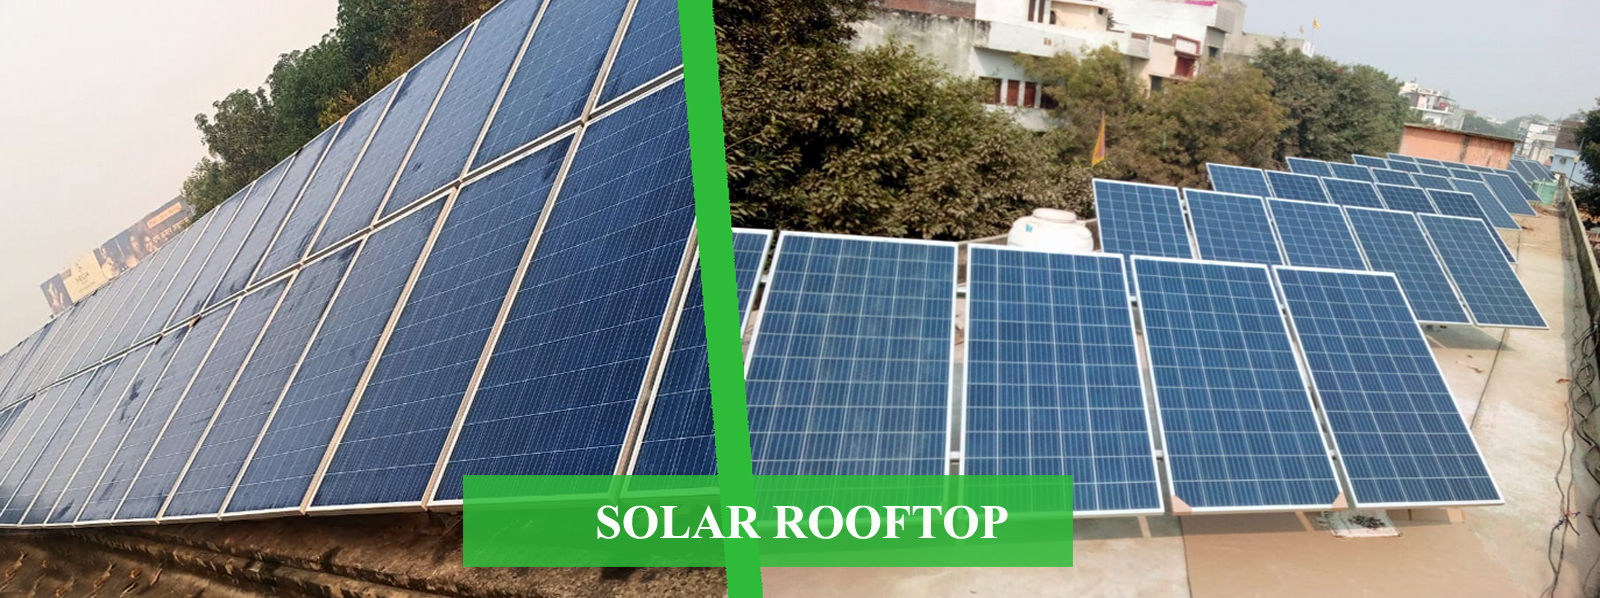 Solar-Rooftop